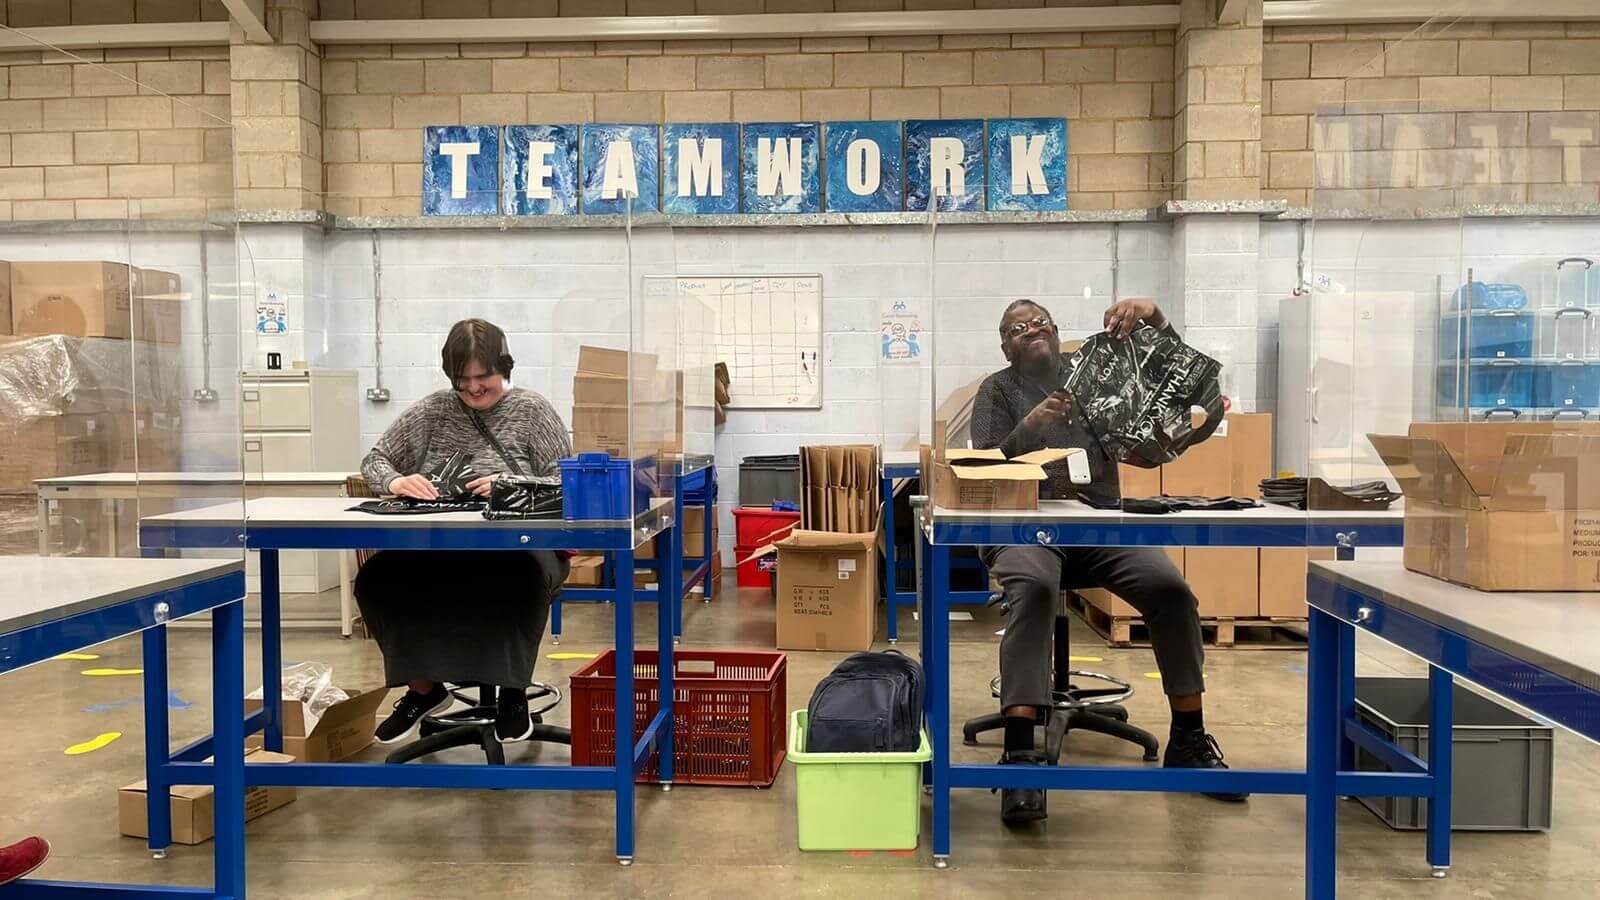 workbenches for teamwork trust